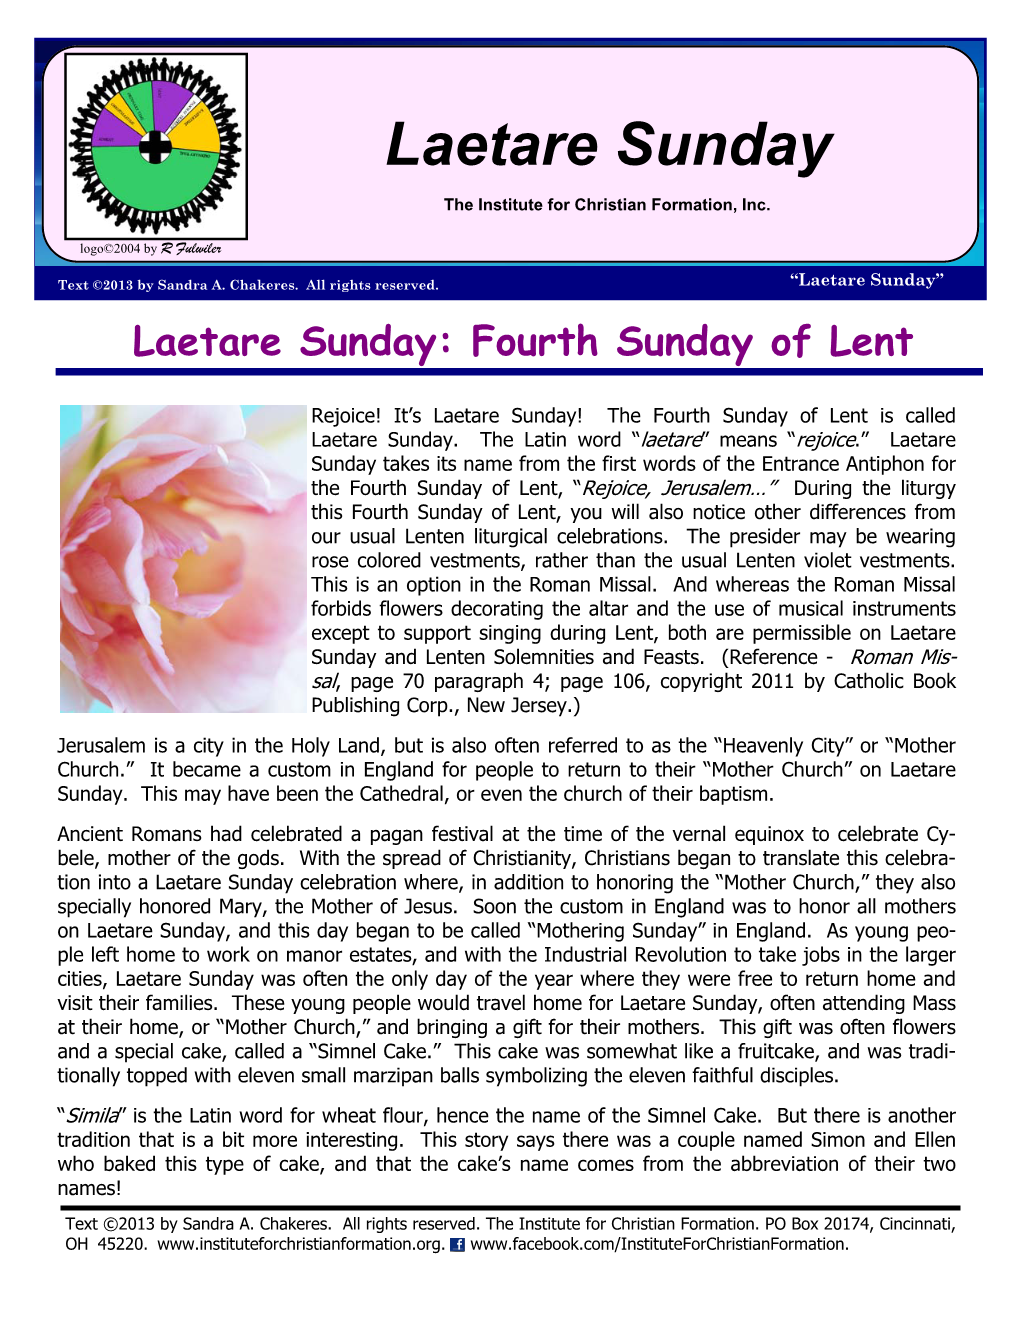 ICF Laetare Sunday Bulletin